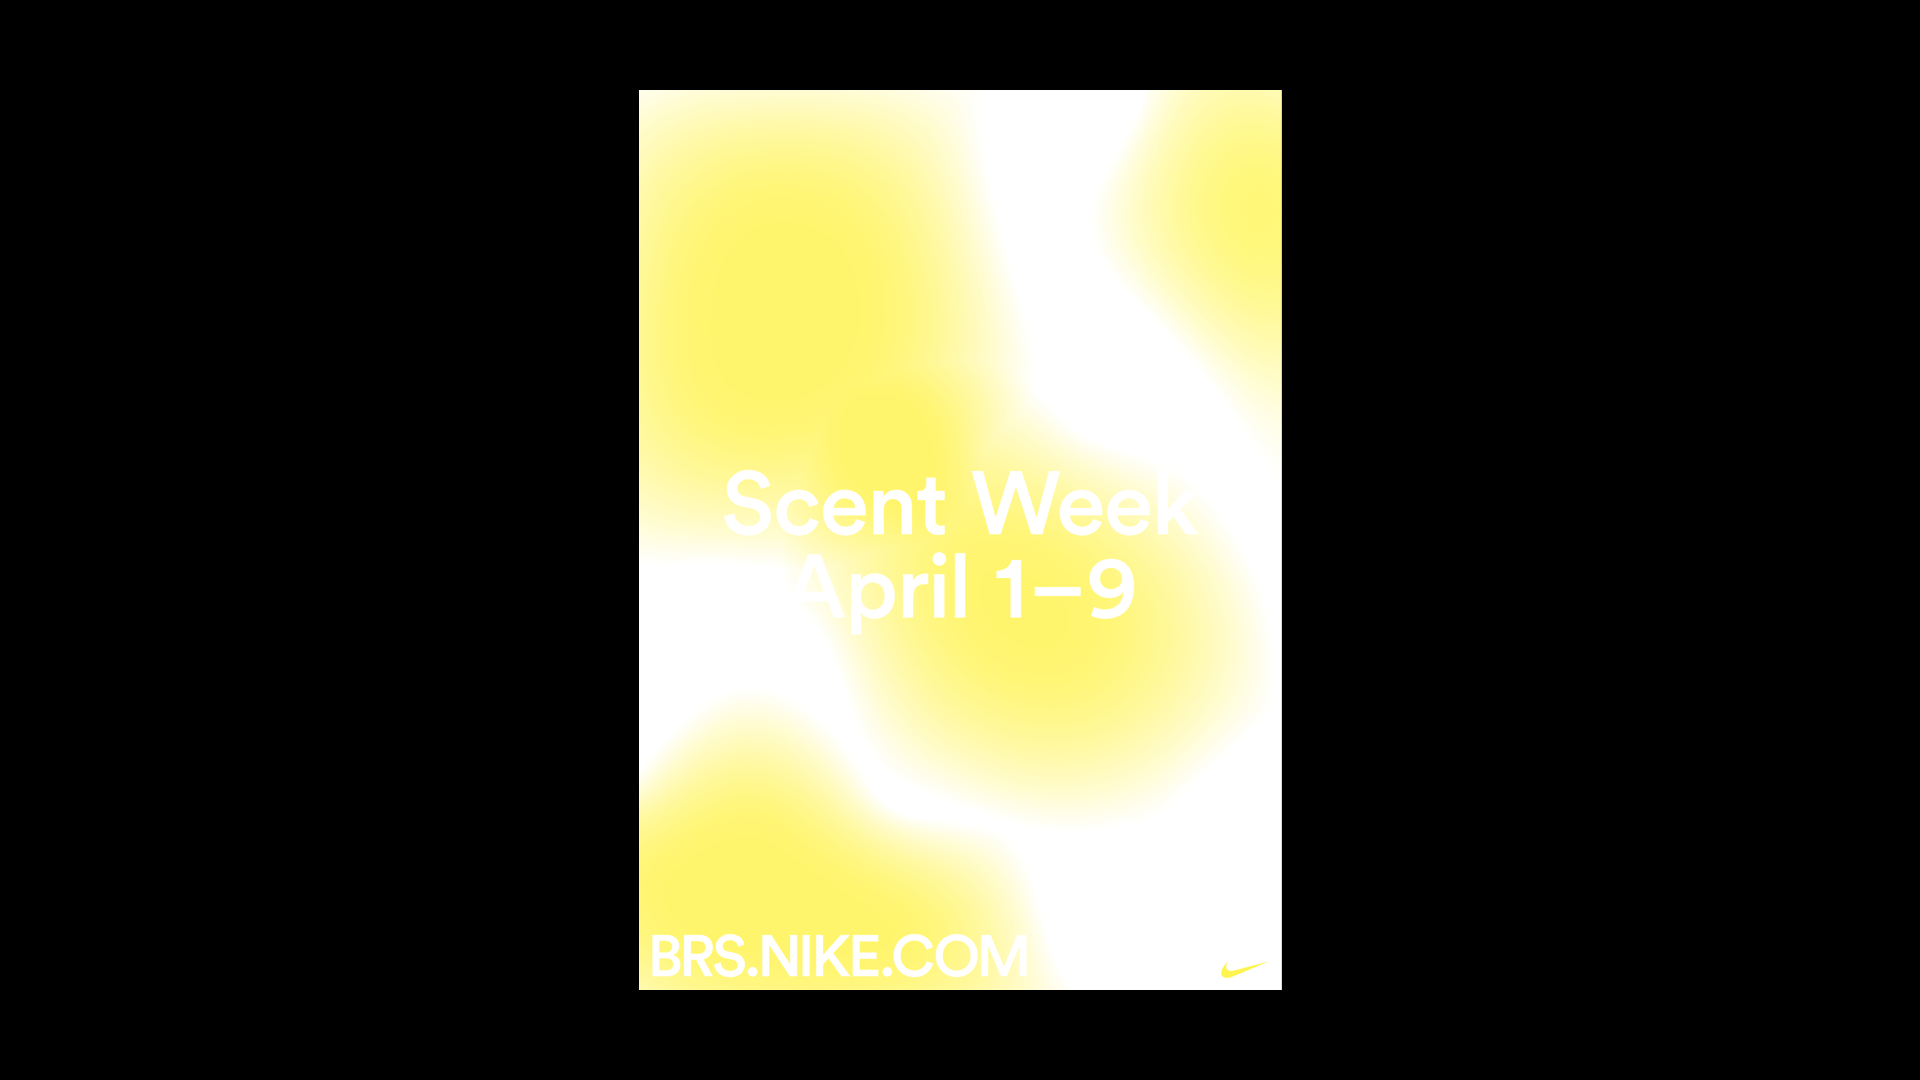 BRS – Scent Week